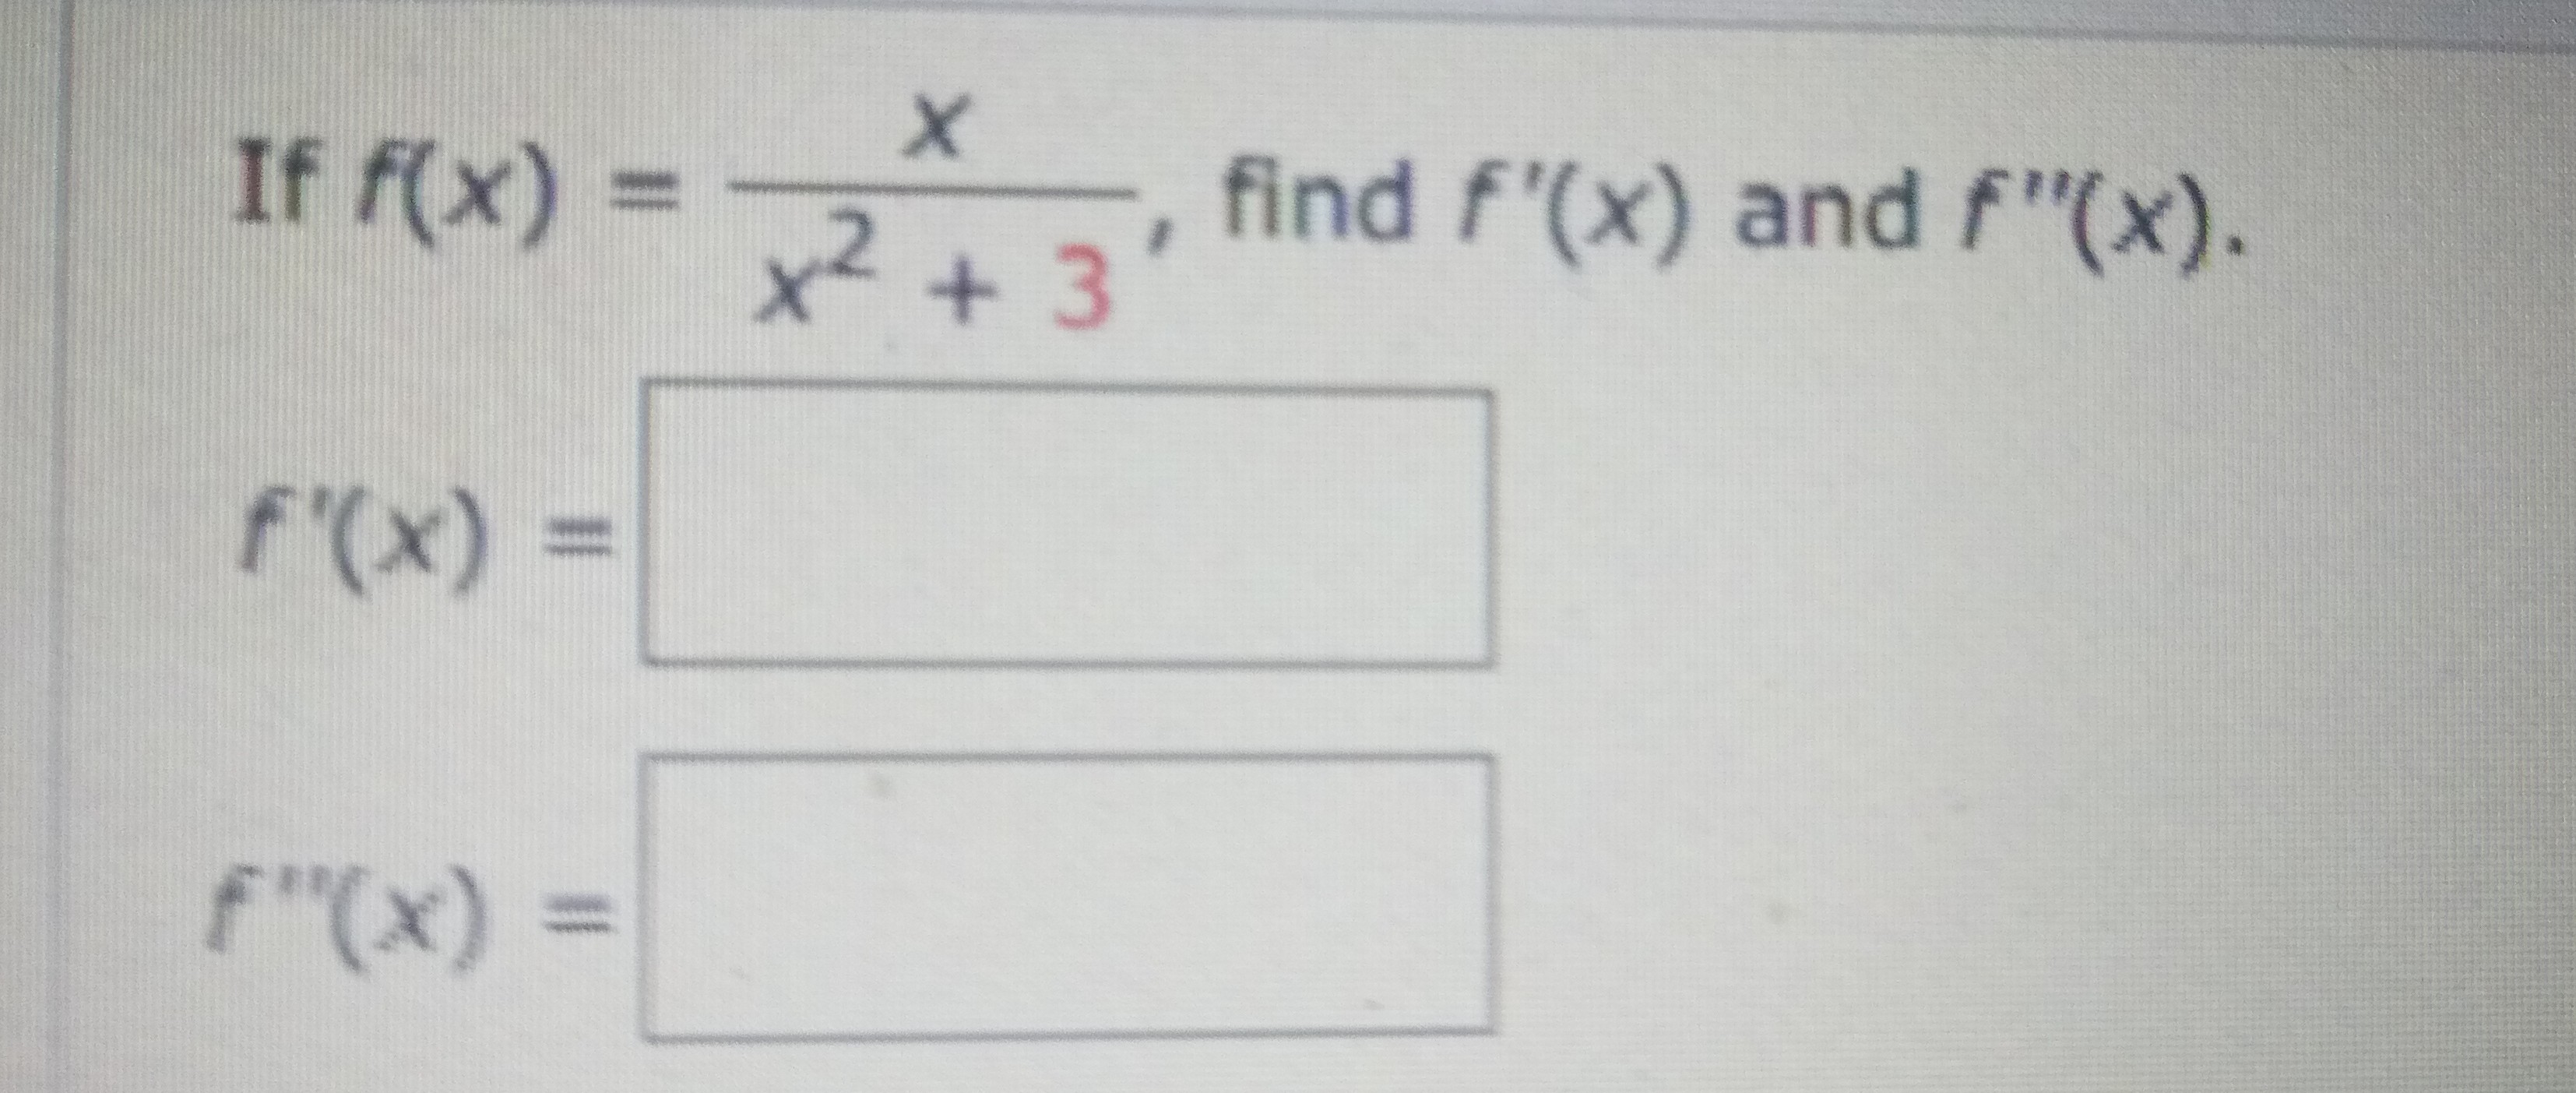 find f'(x) and f"(x).
:
If f(x)
x²
+3
f'(x) =
f"(x) =
